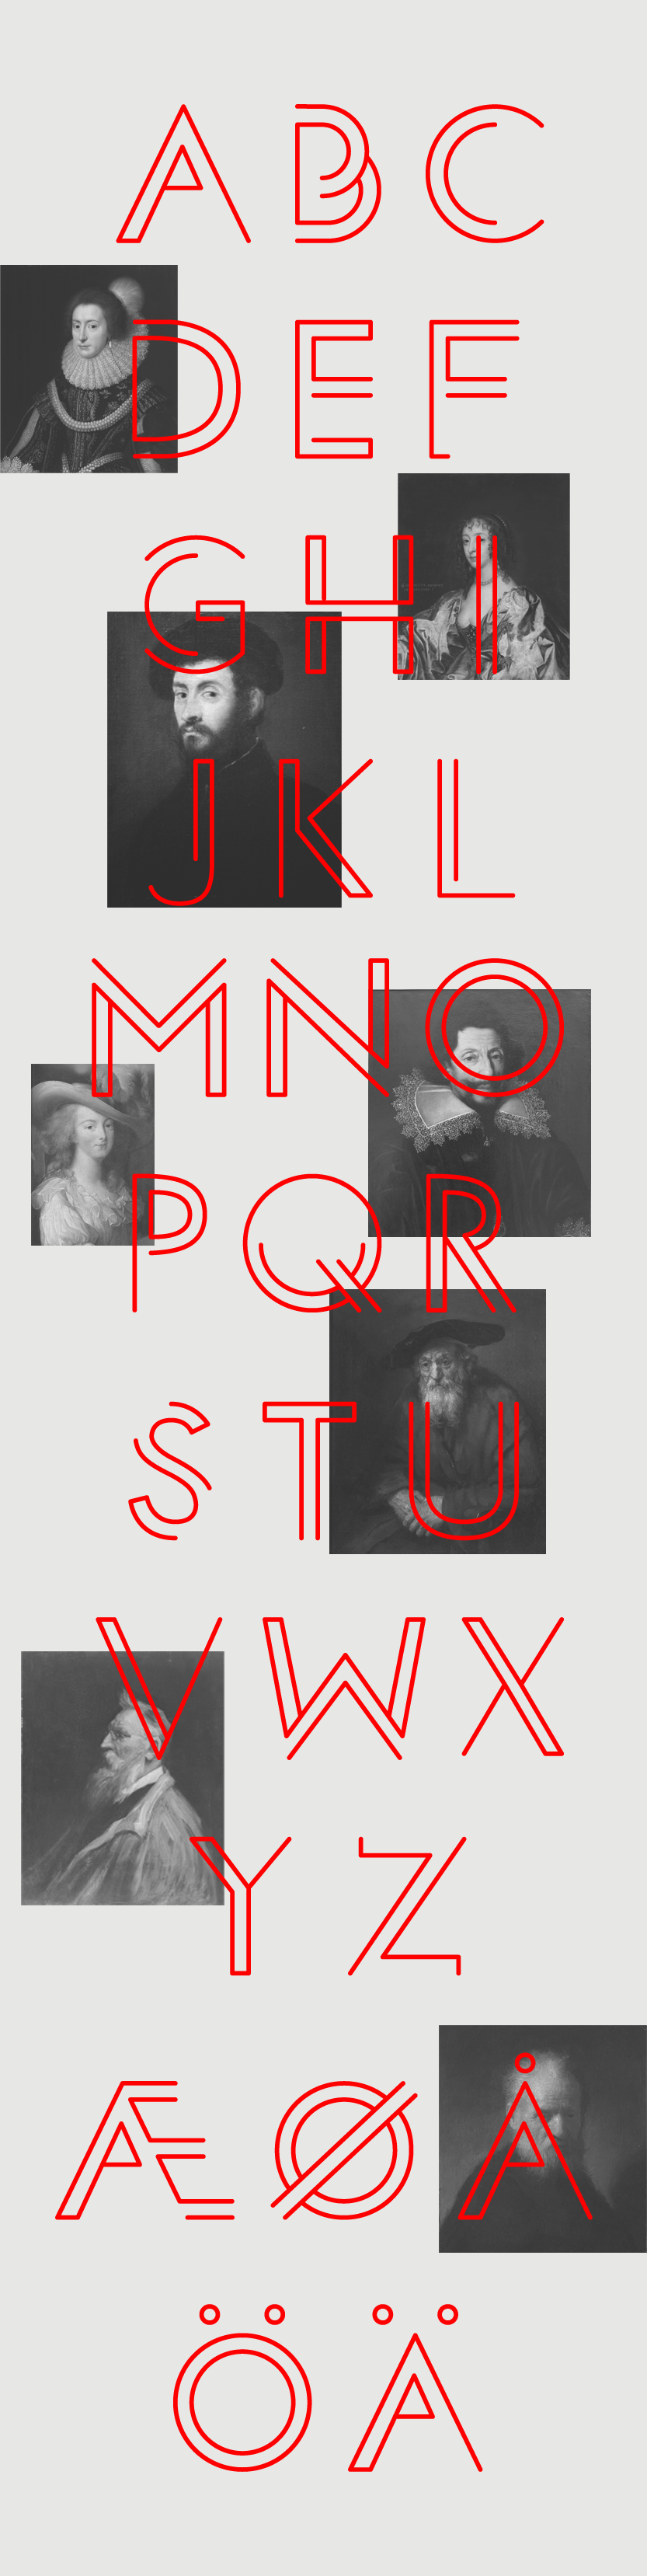 illusory sans  westerdals  marcus  marcus pedersen  font  typography  neon illusory Typeface